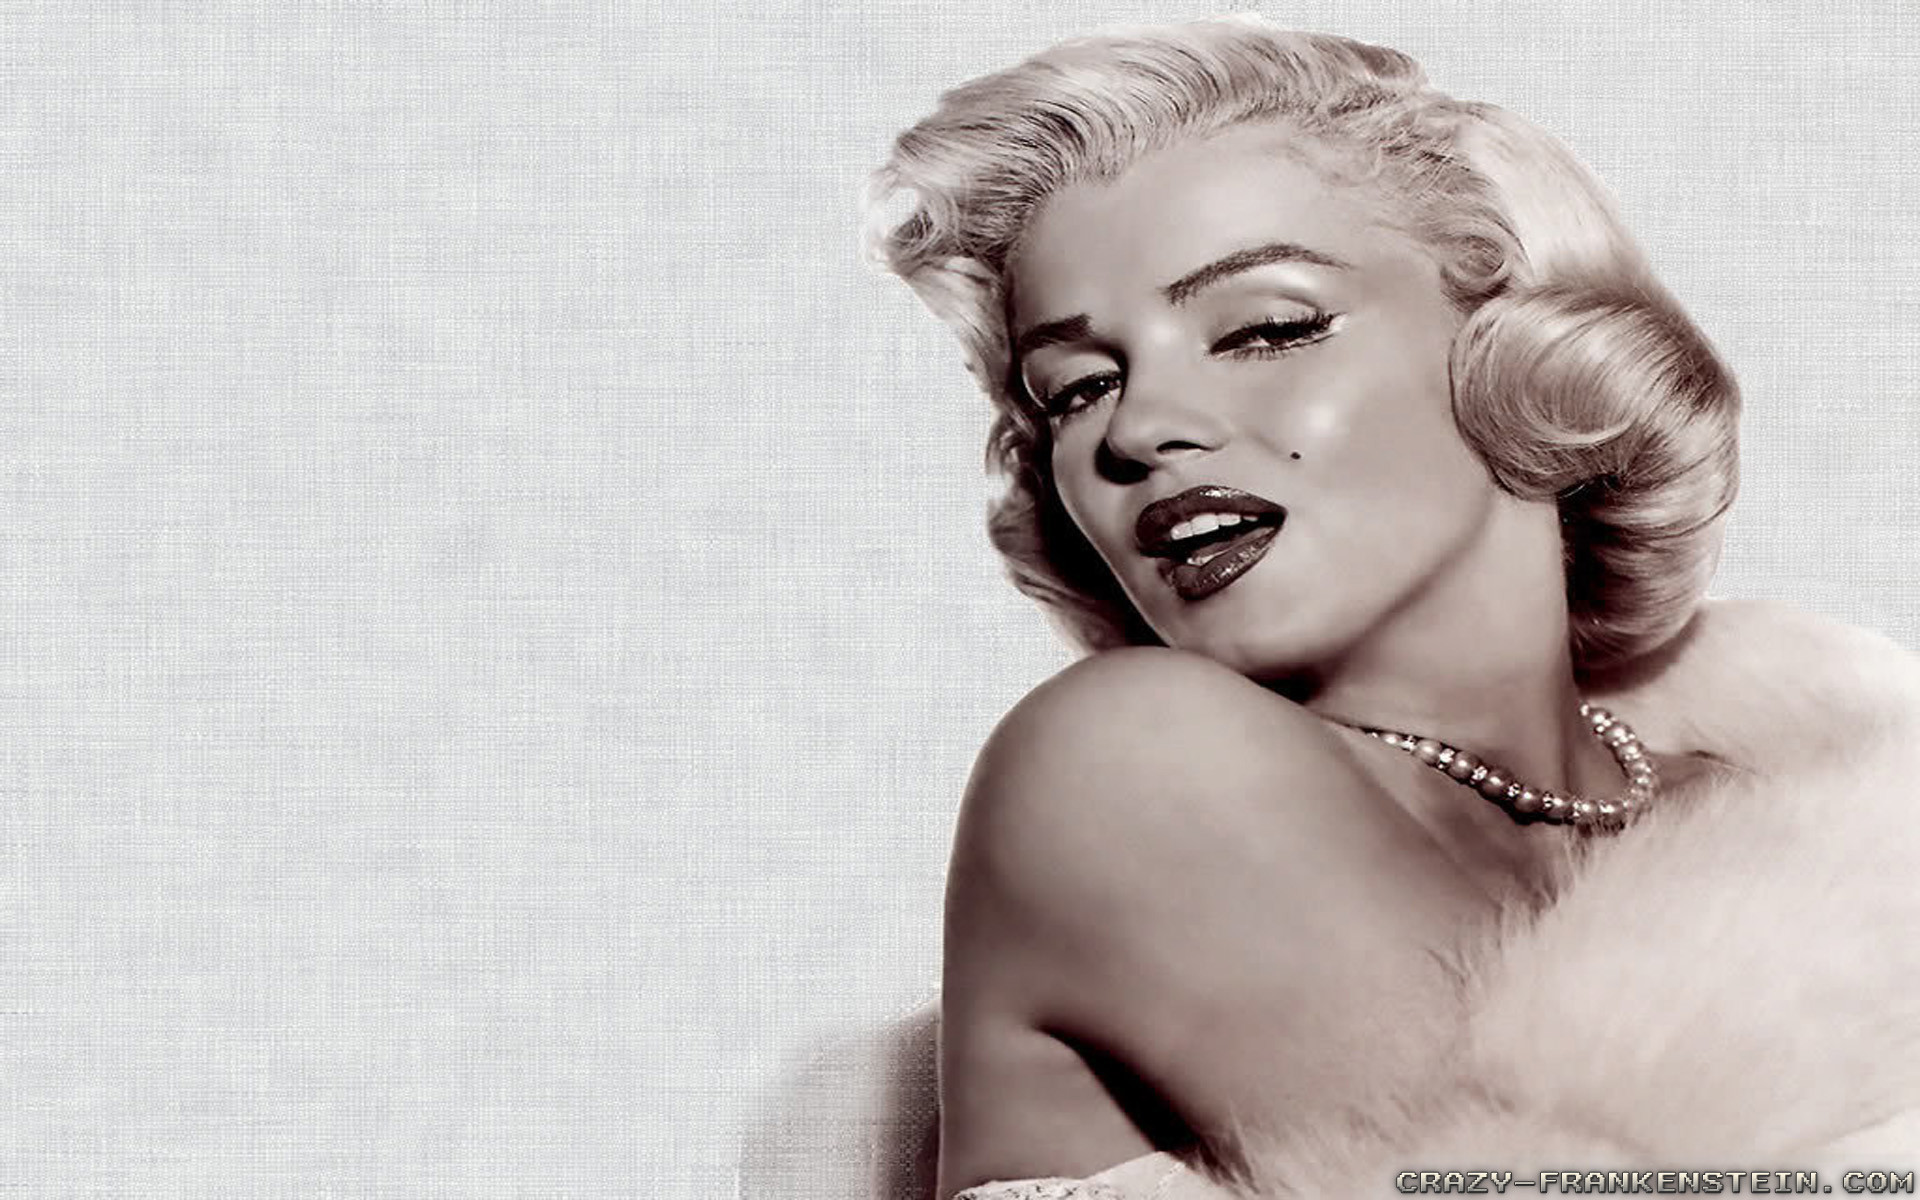 Videos Â· Home > Wallpapers > Female celebrity wallpapers Â· Marilyn Monroe  …